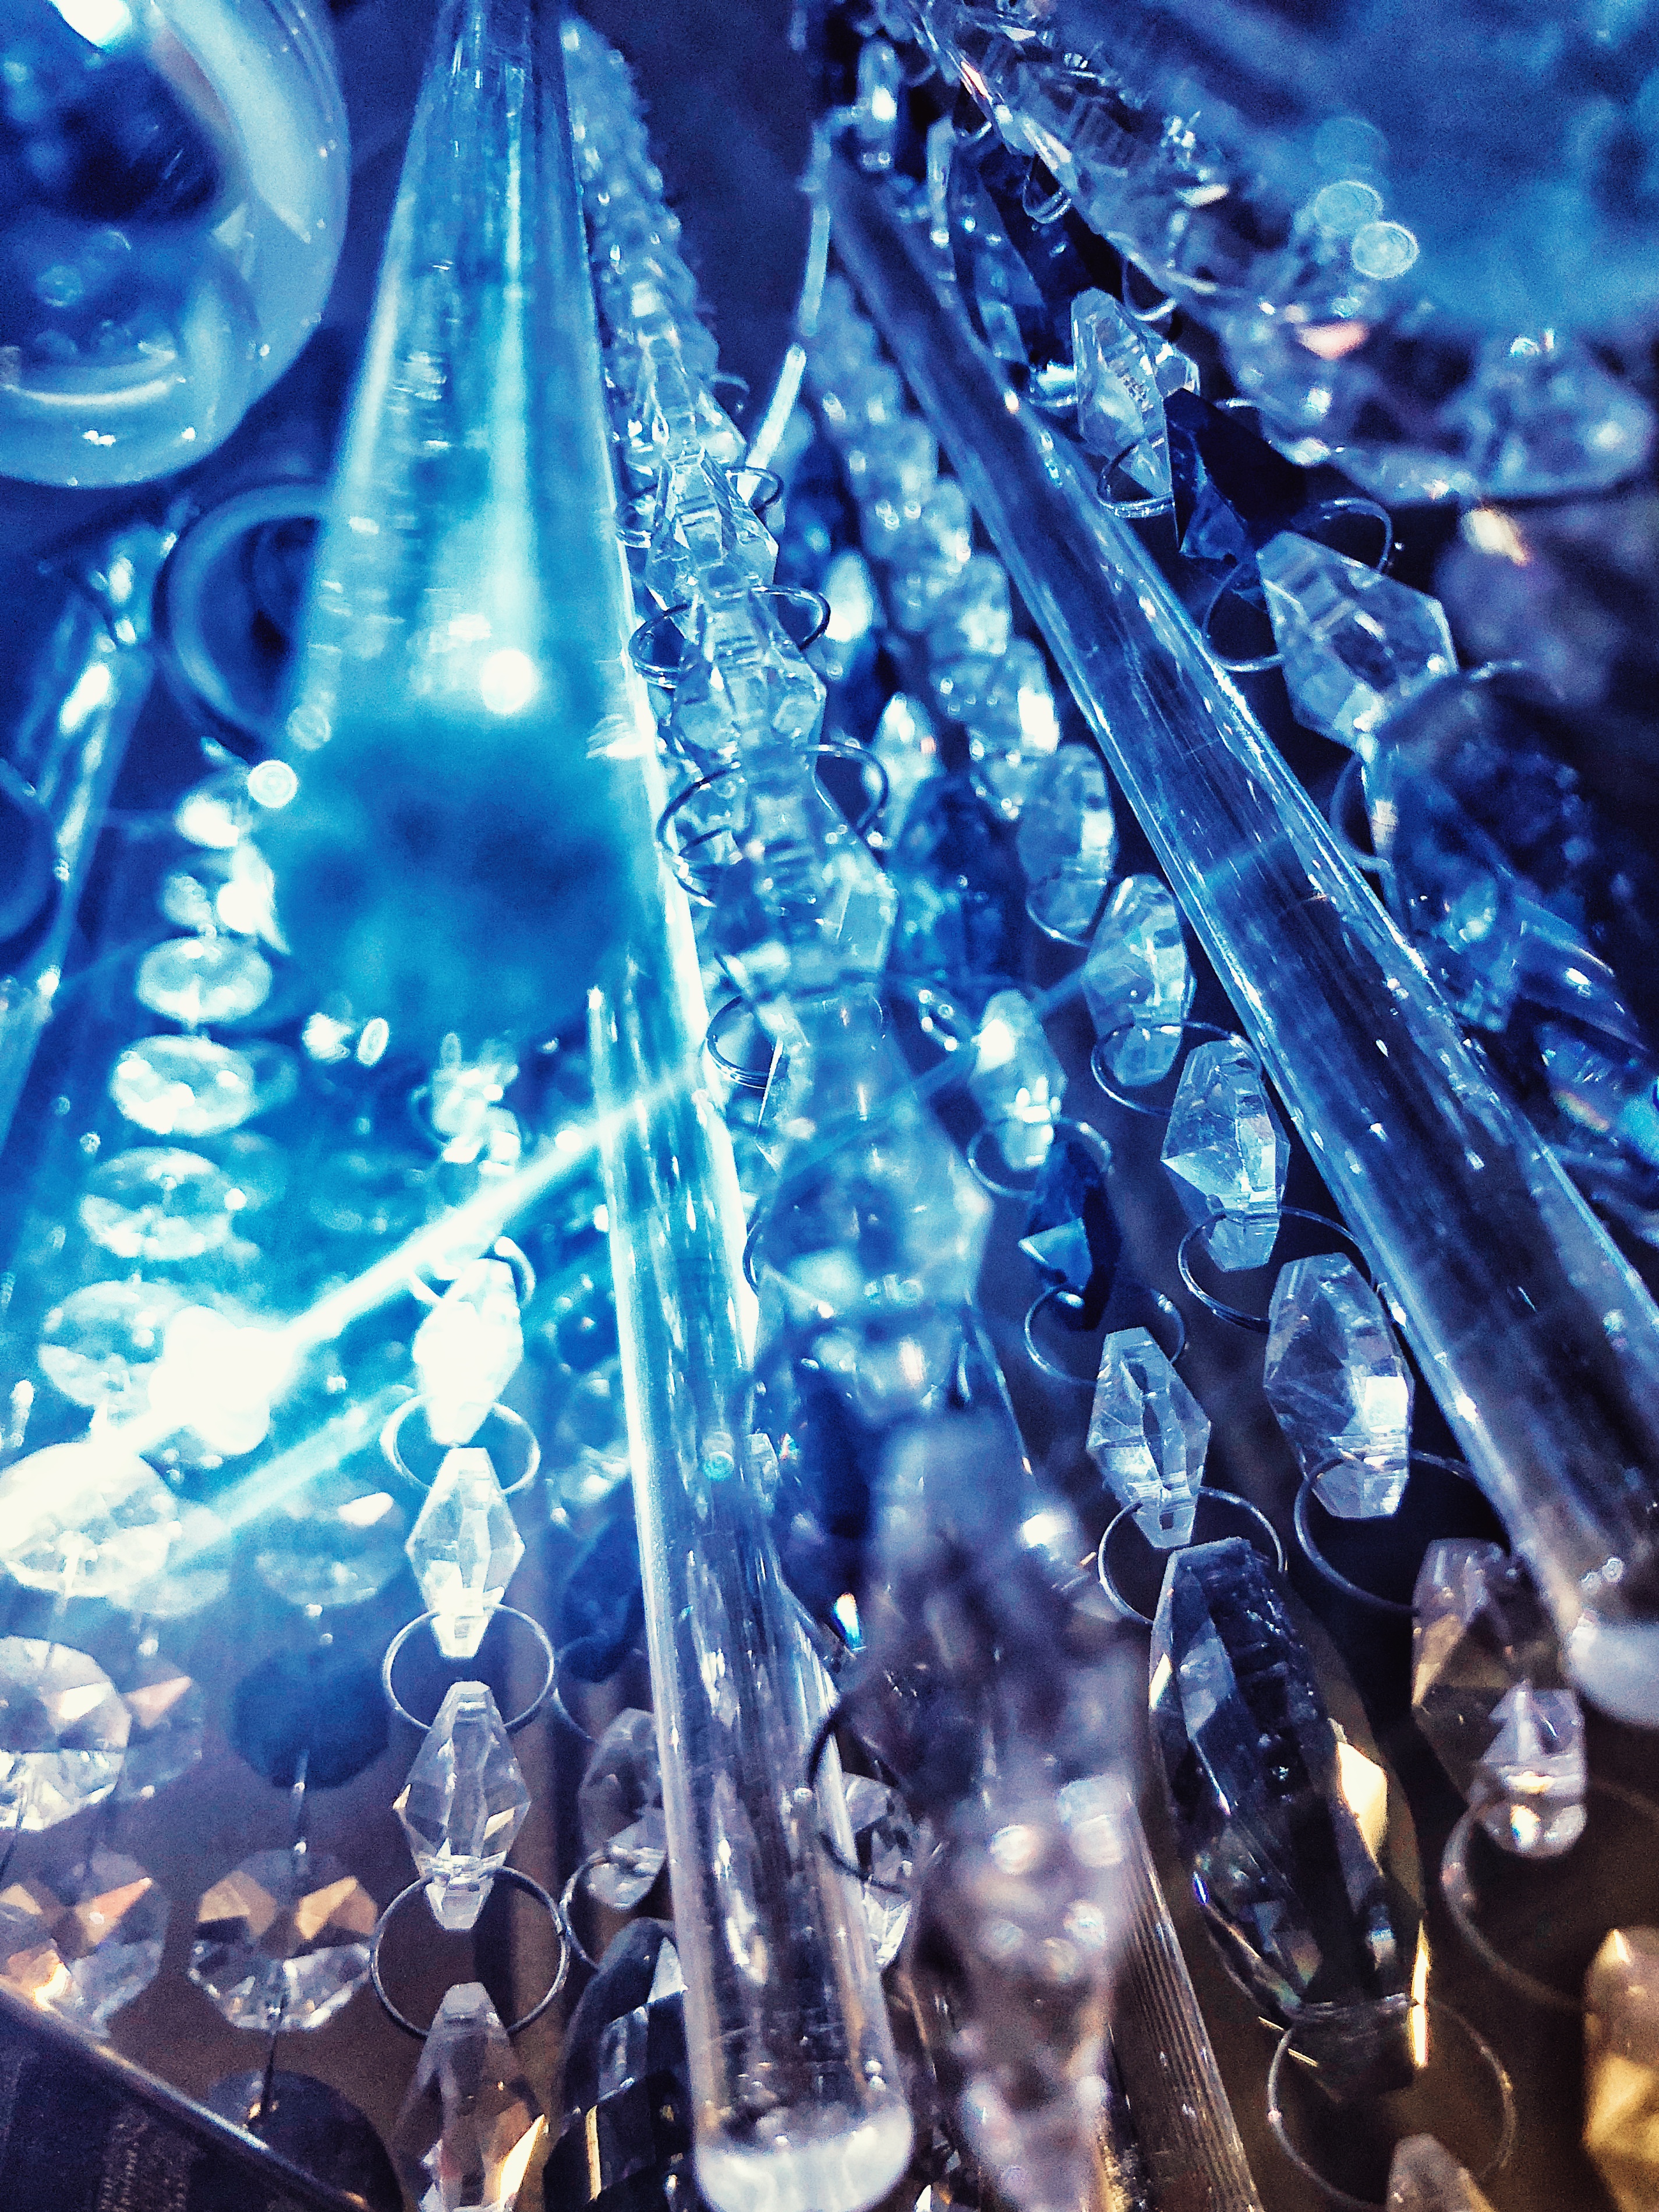 Image Shine Brightness Crystals Lamp Blue Water